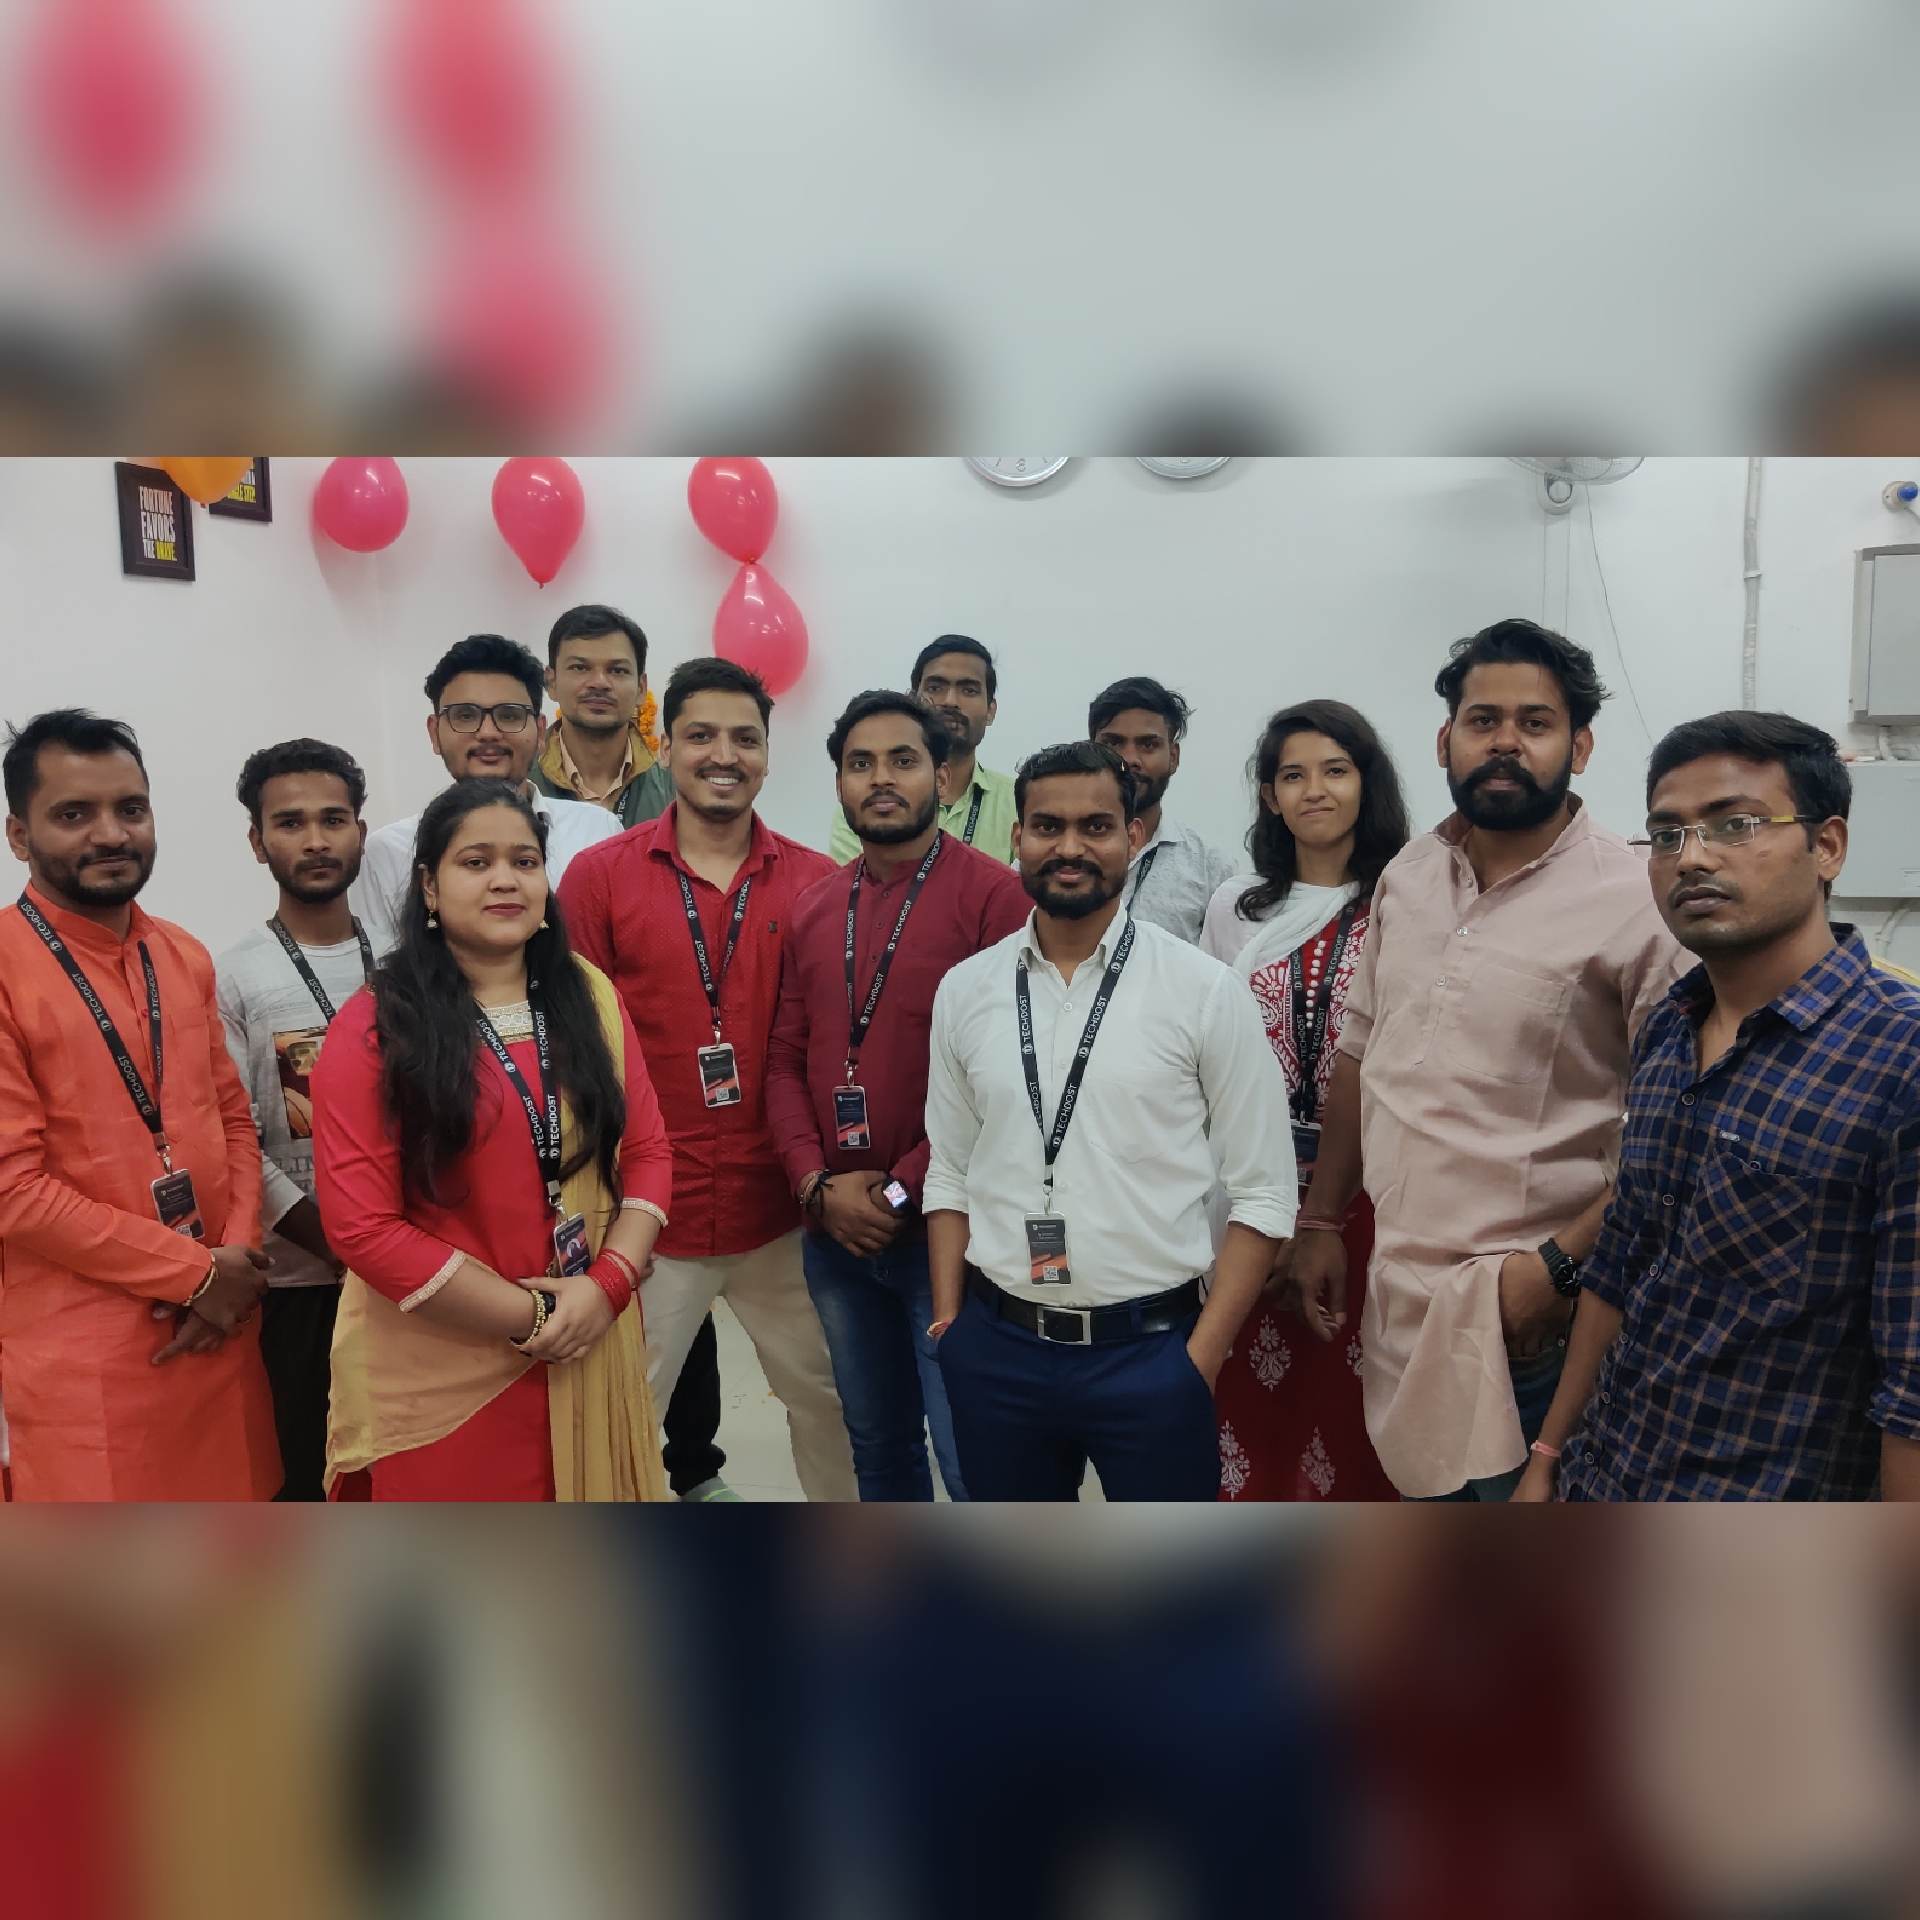 digital-marketing-company-company-diwali-celebration-techdost-office-4